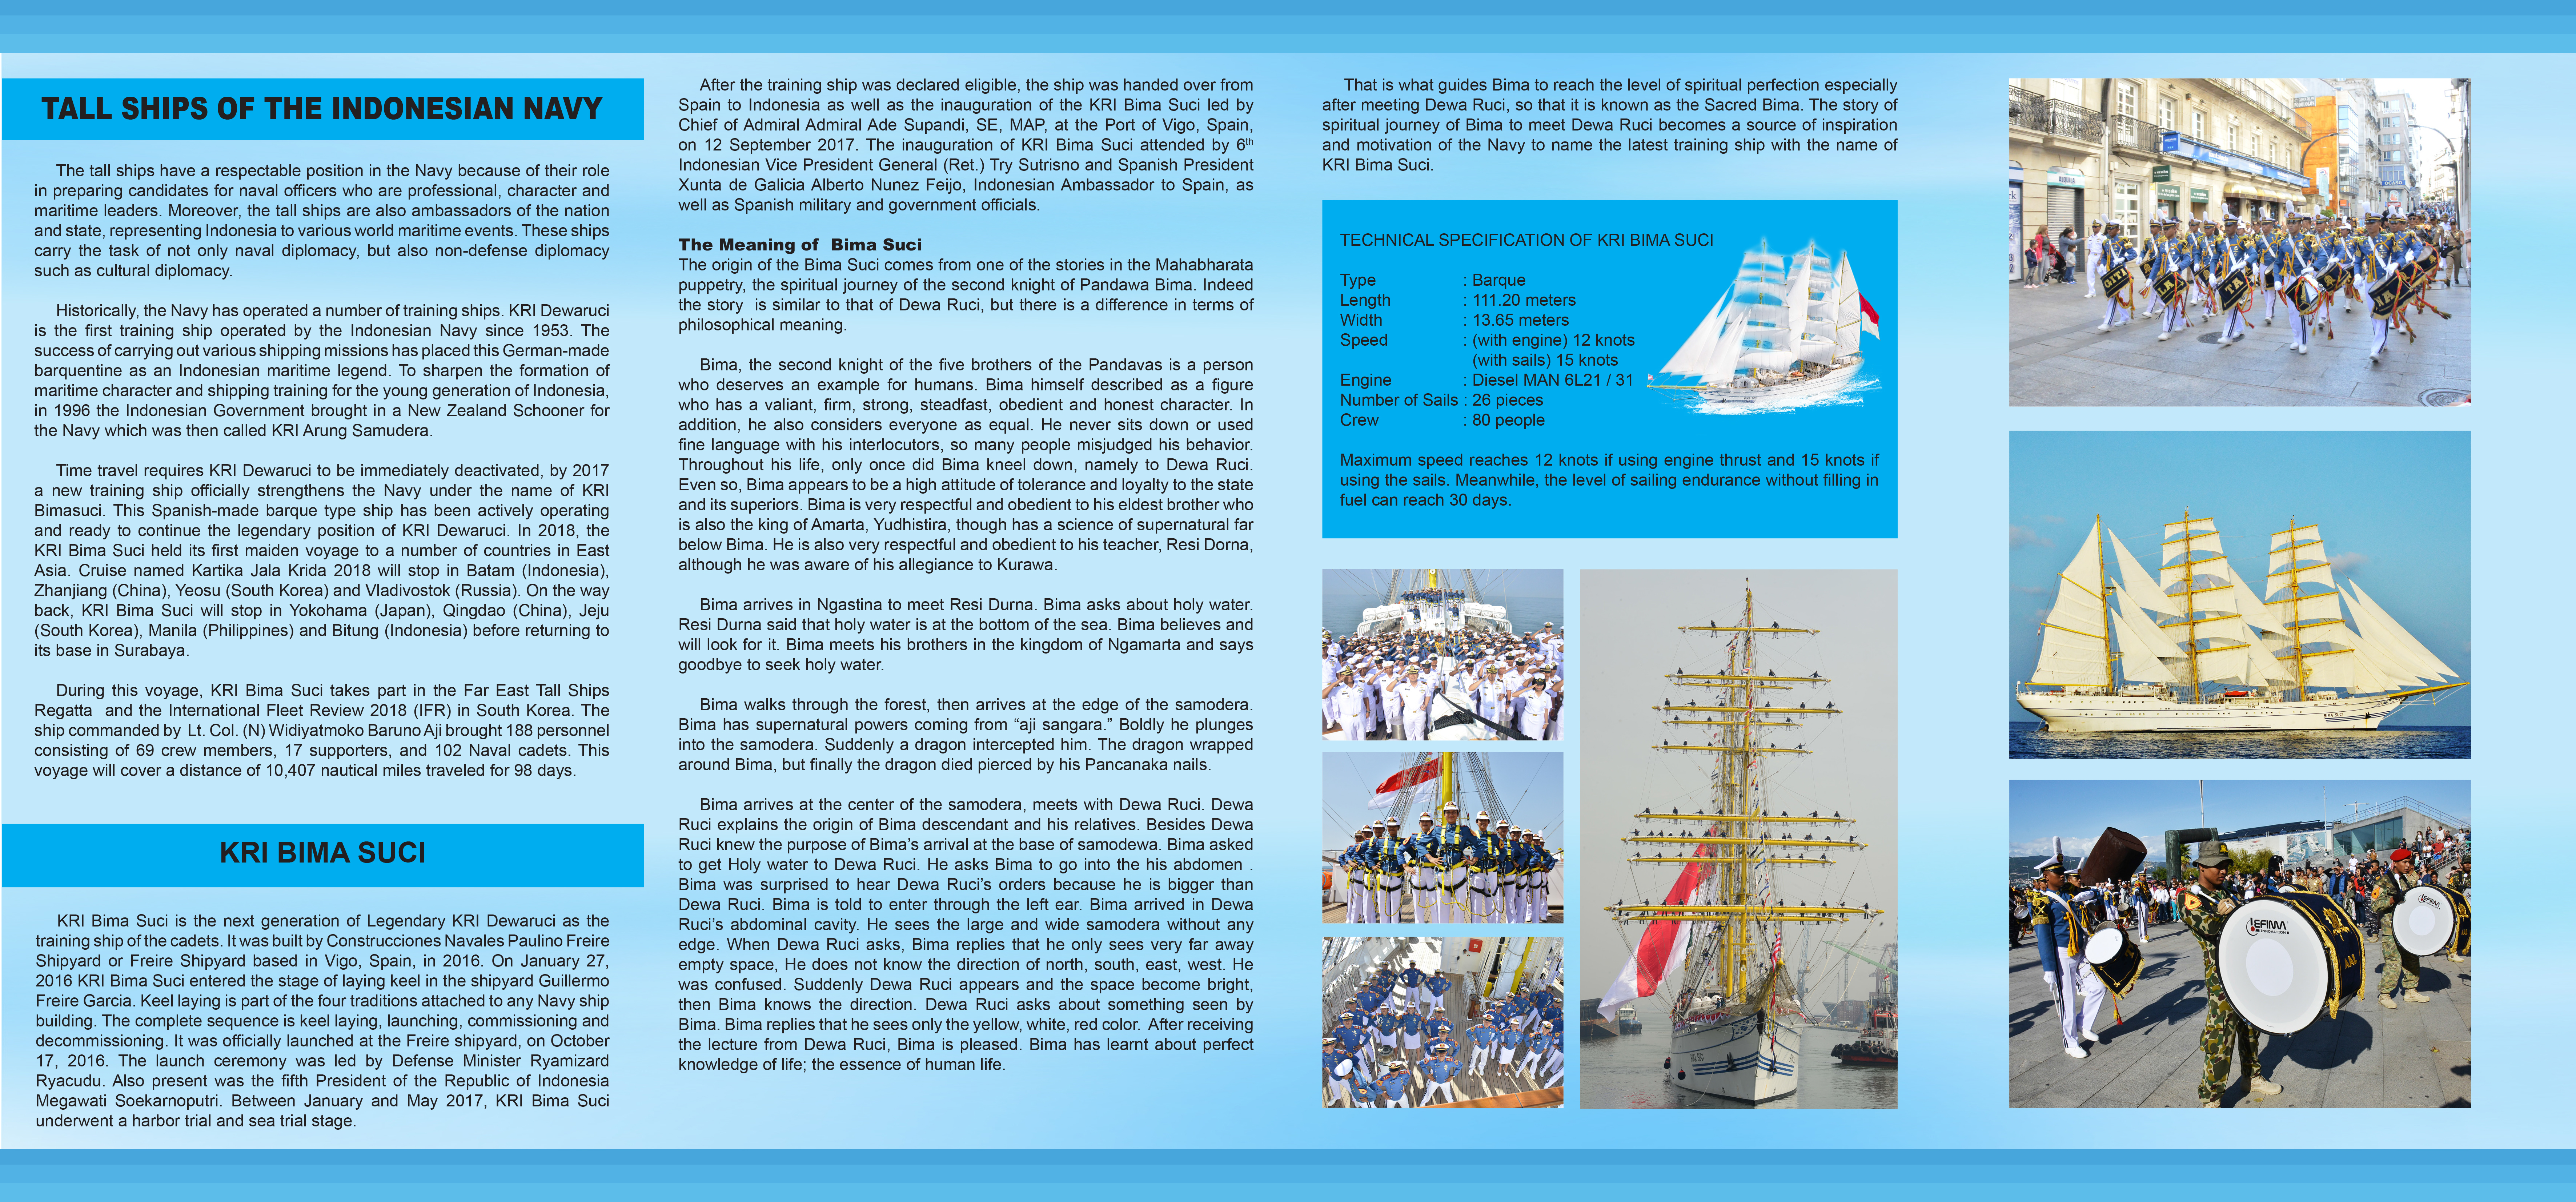 SPRED COVER BROSUR BIMA SUCI THE INDONESIAN NAVY TALL SHIP, 15X28, 31 JULI 2018-2